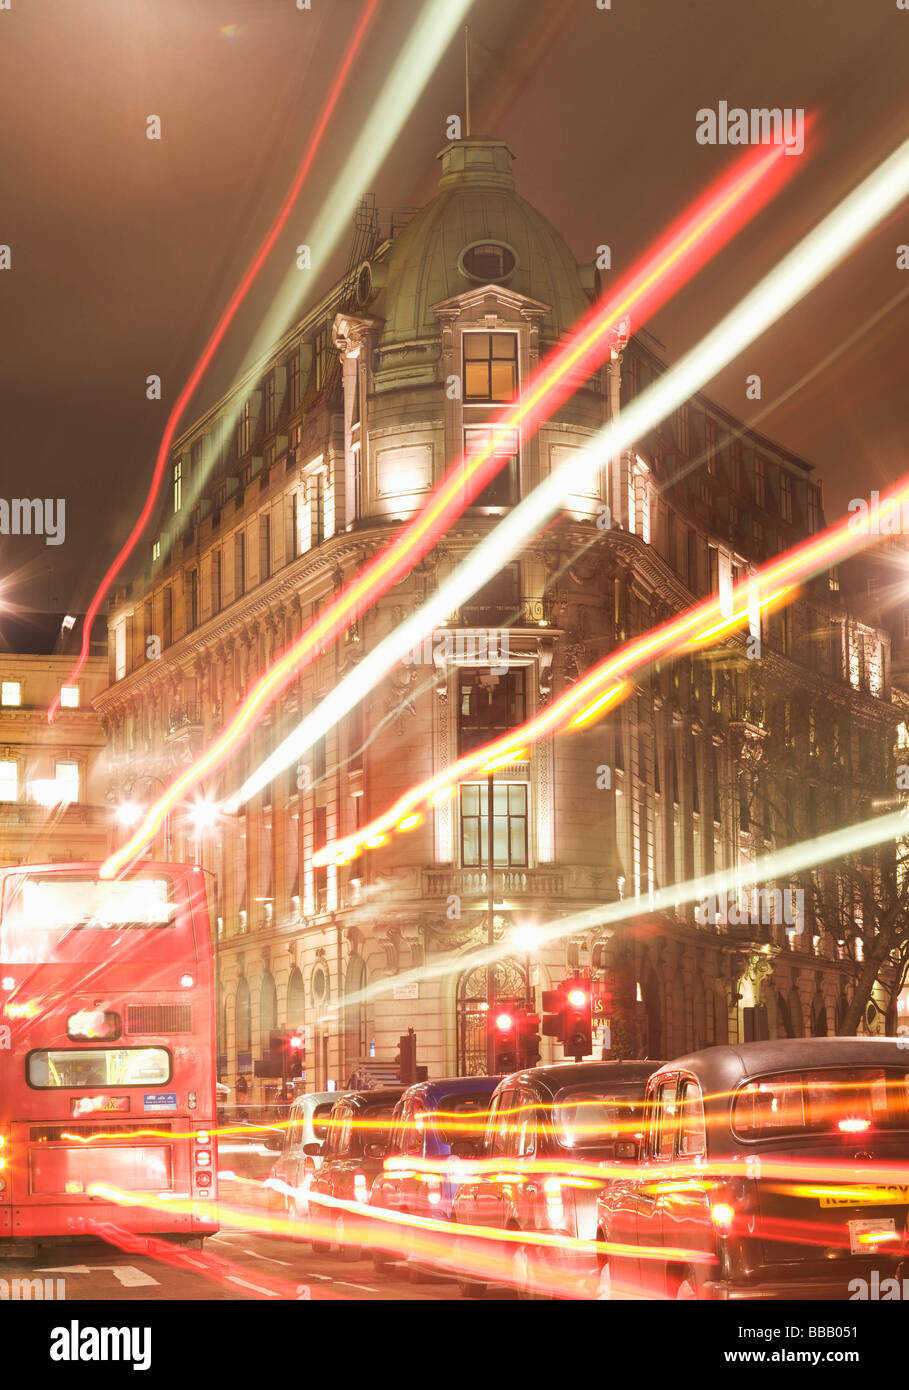 London street scene at night Stock Photo